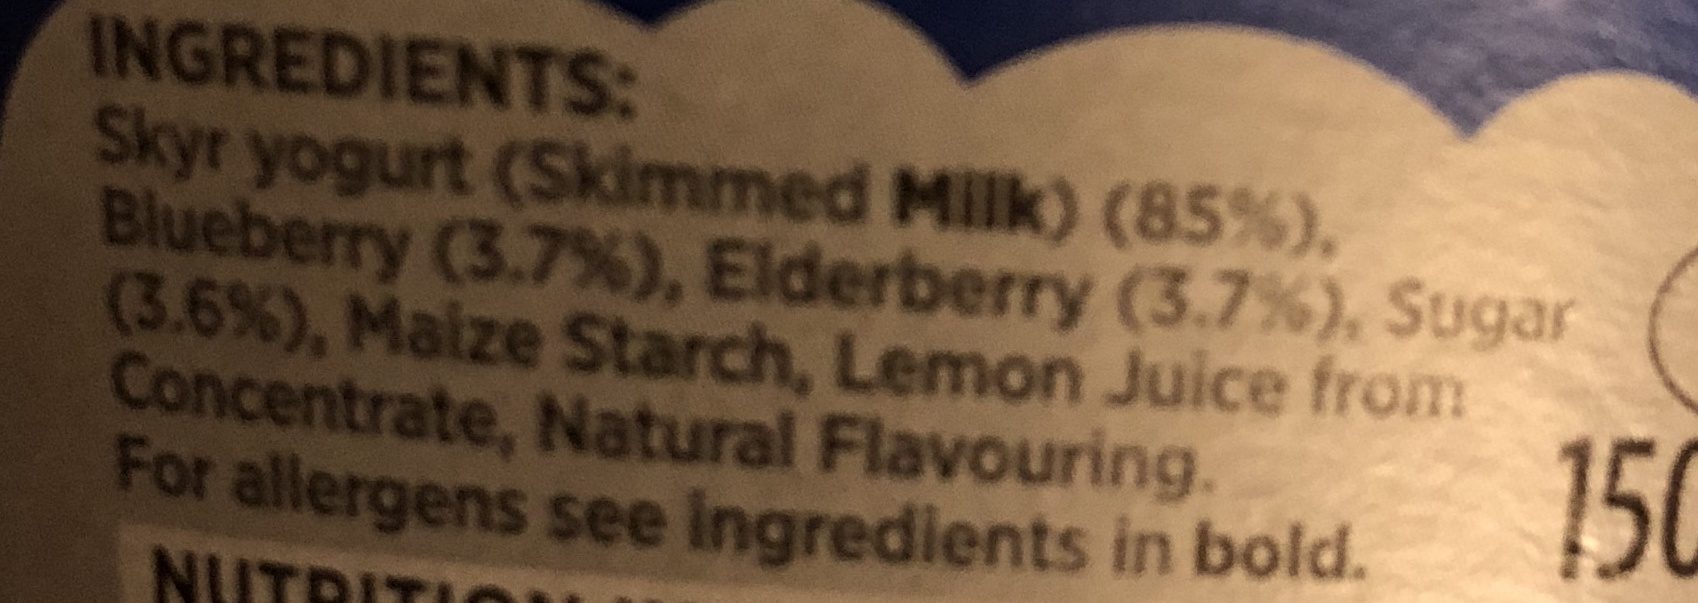 Arla Skyr Icelandic Style Yogurt,Blueberry 150G - Ingredients